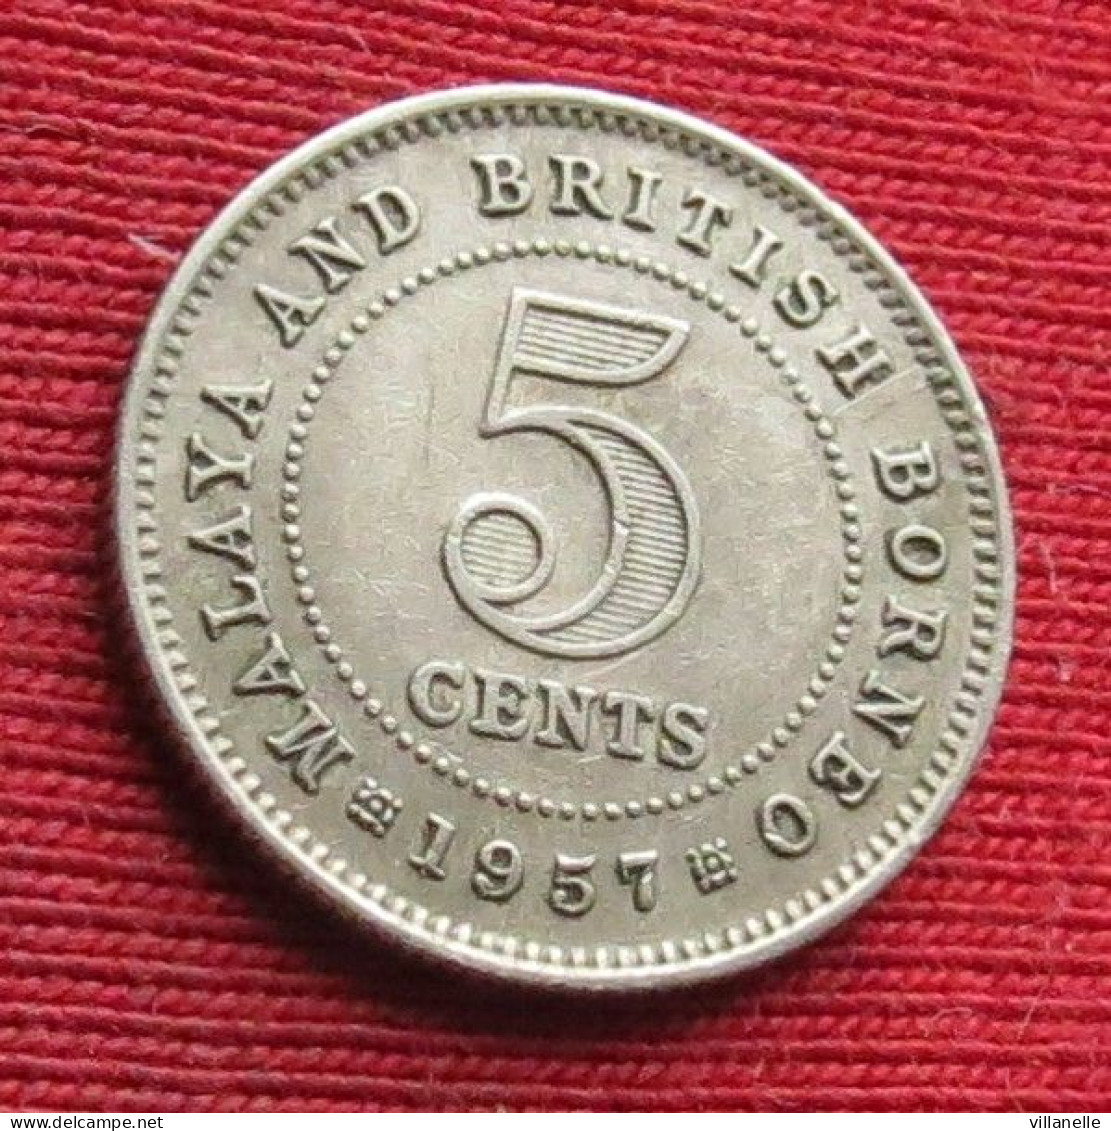 Malaya And British Borneo 5 Cents 1957  W ºº - Maleisië